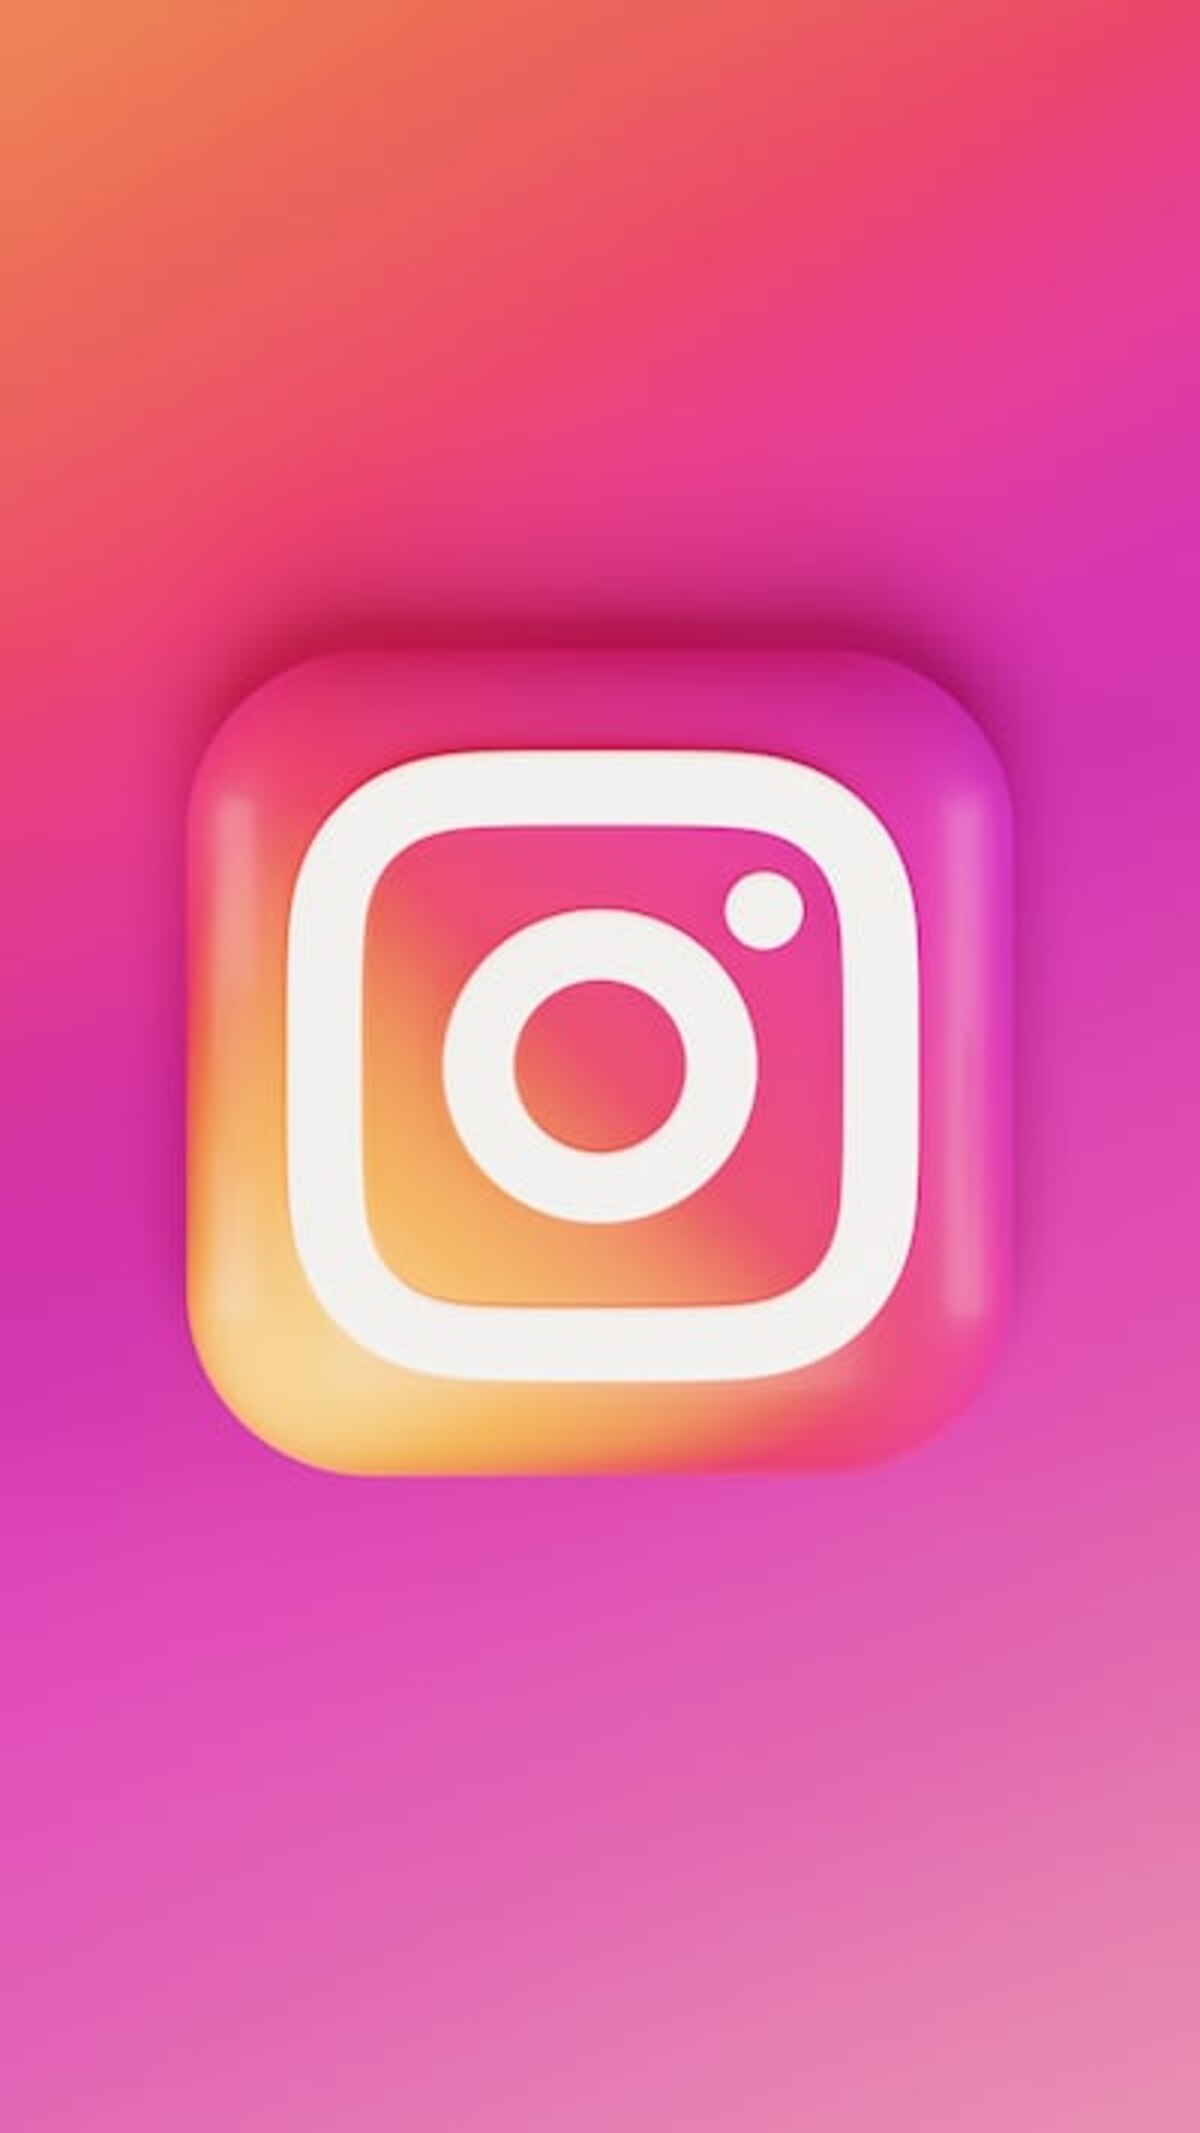 buy Instagram followers Australia